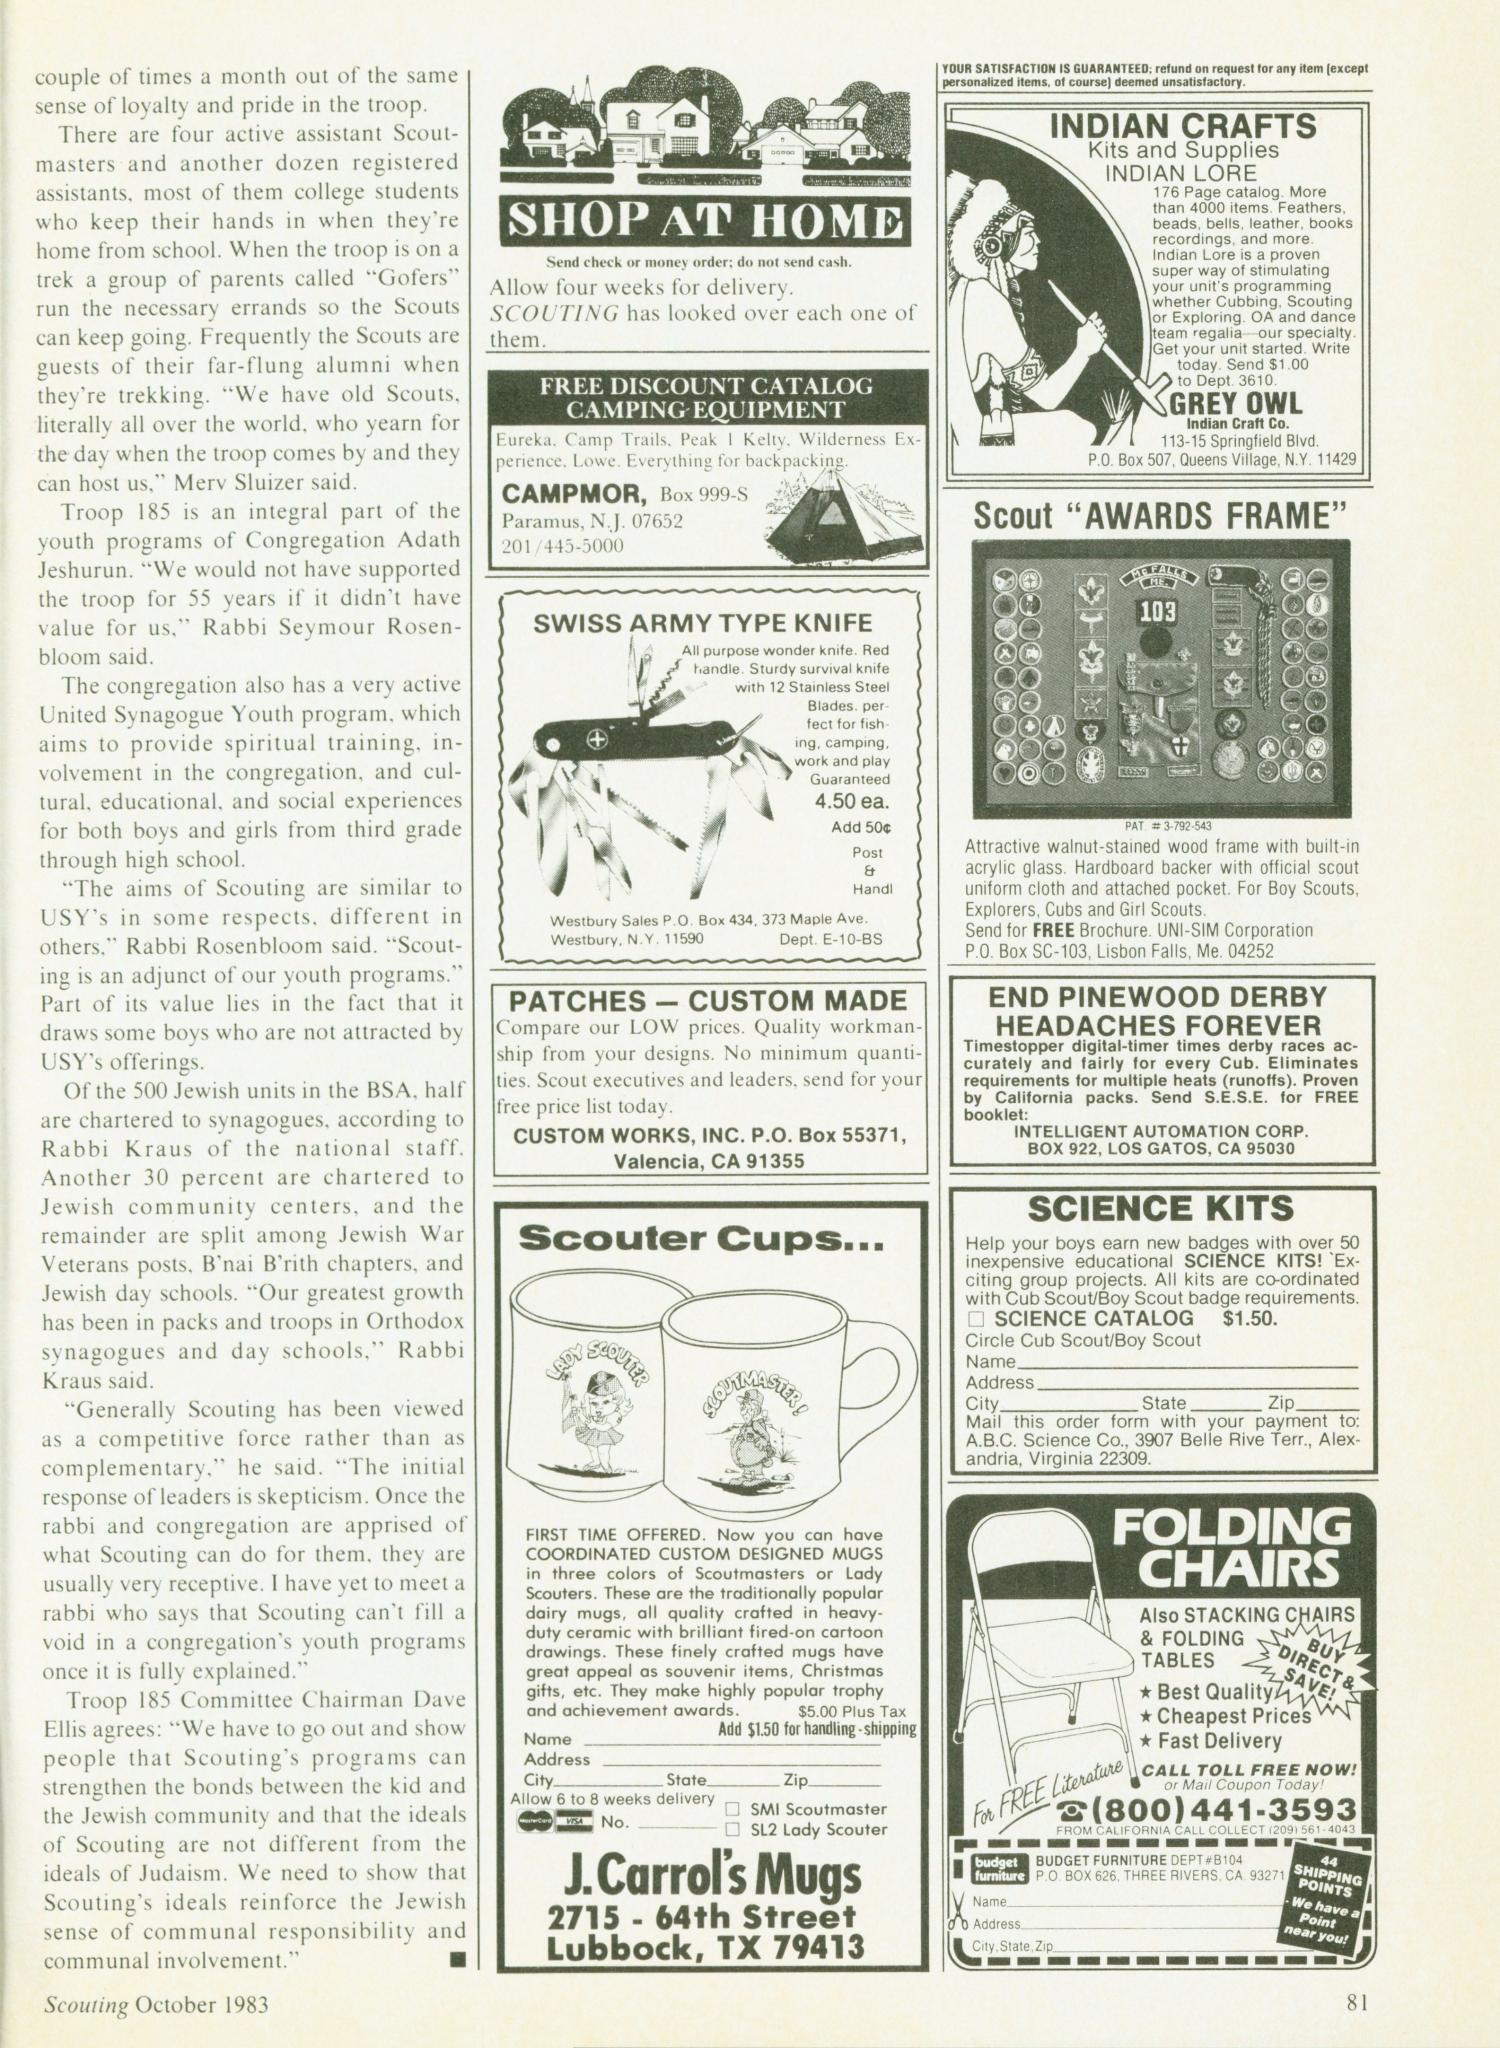 Scouting, Volume 71, Number 5, October 1983
                                                
                                                    81
                                                